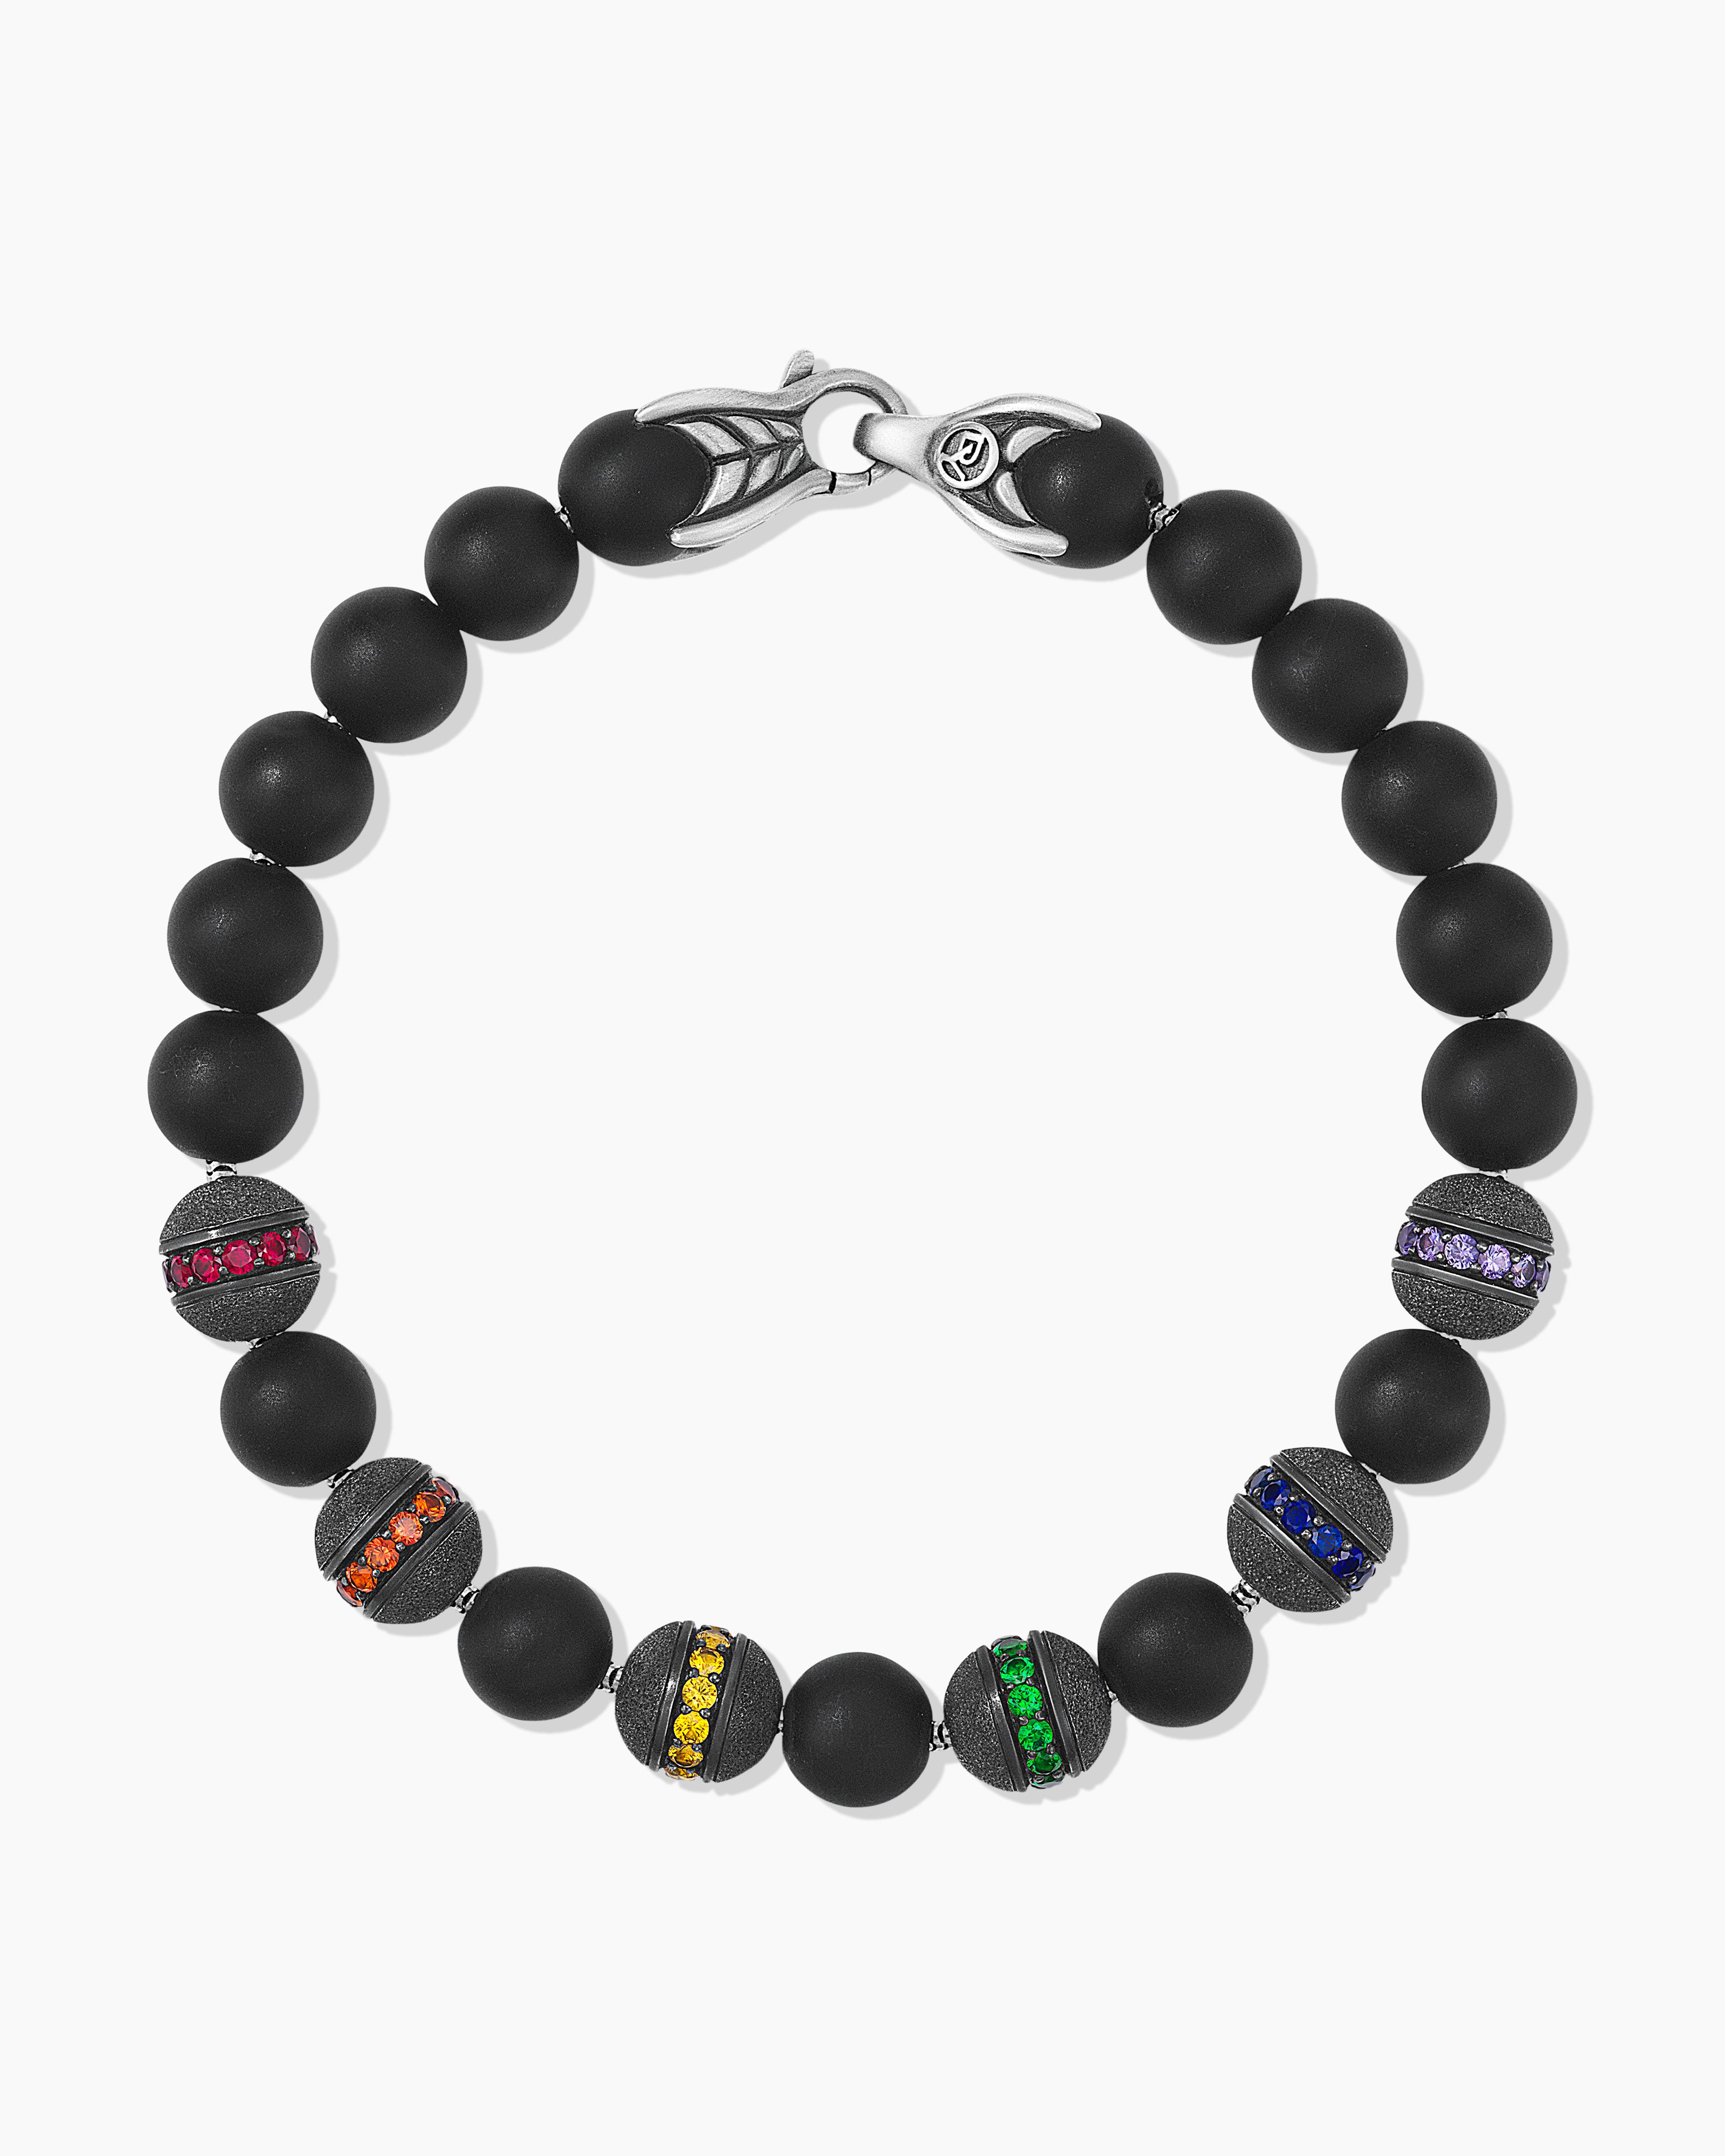 David Yurman Spiritual Beads Rainbow Bracelet in Sterling Silver with Black Onyx, Sapphires and Tsavorites, 8mm Men's Size Large